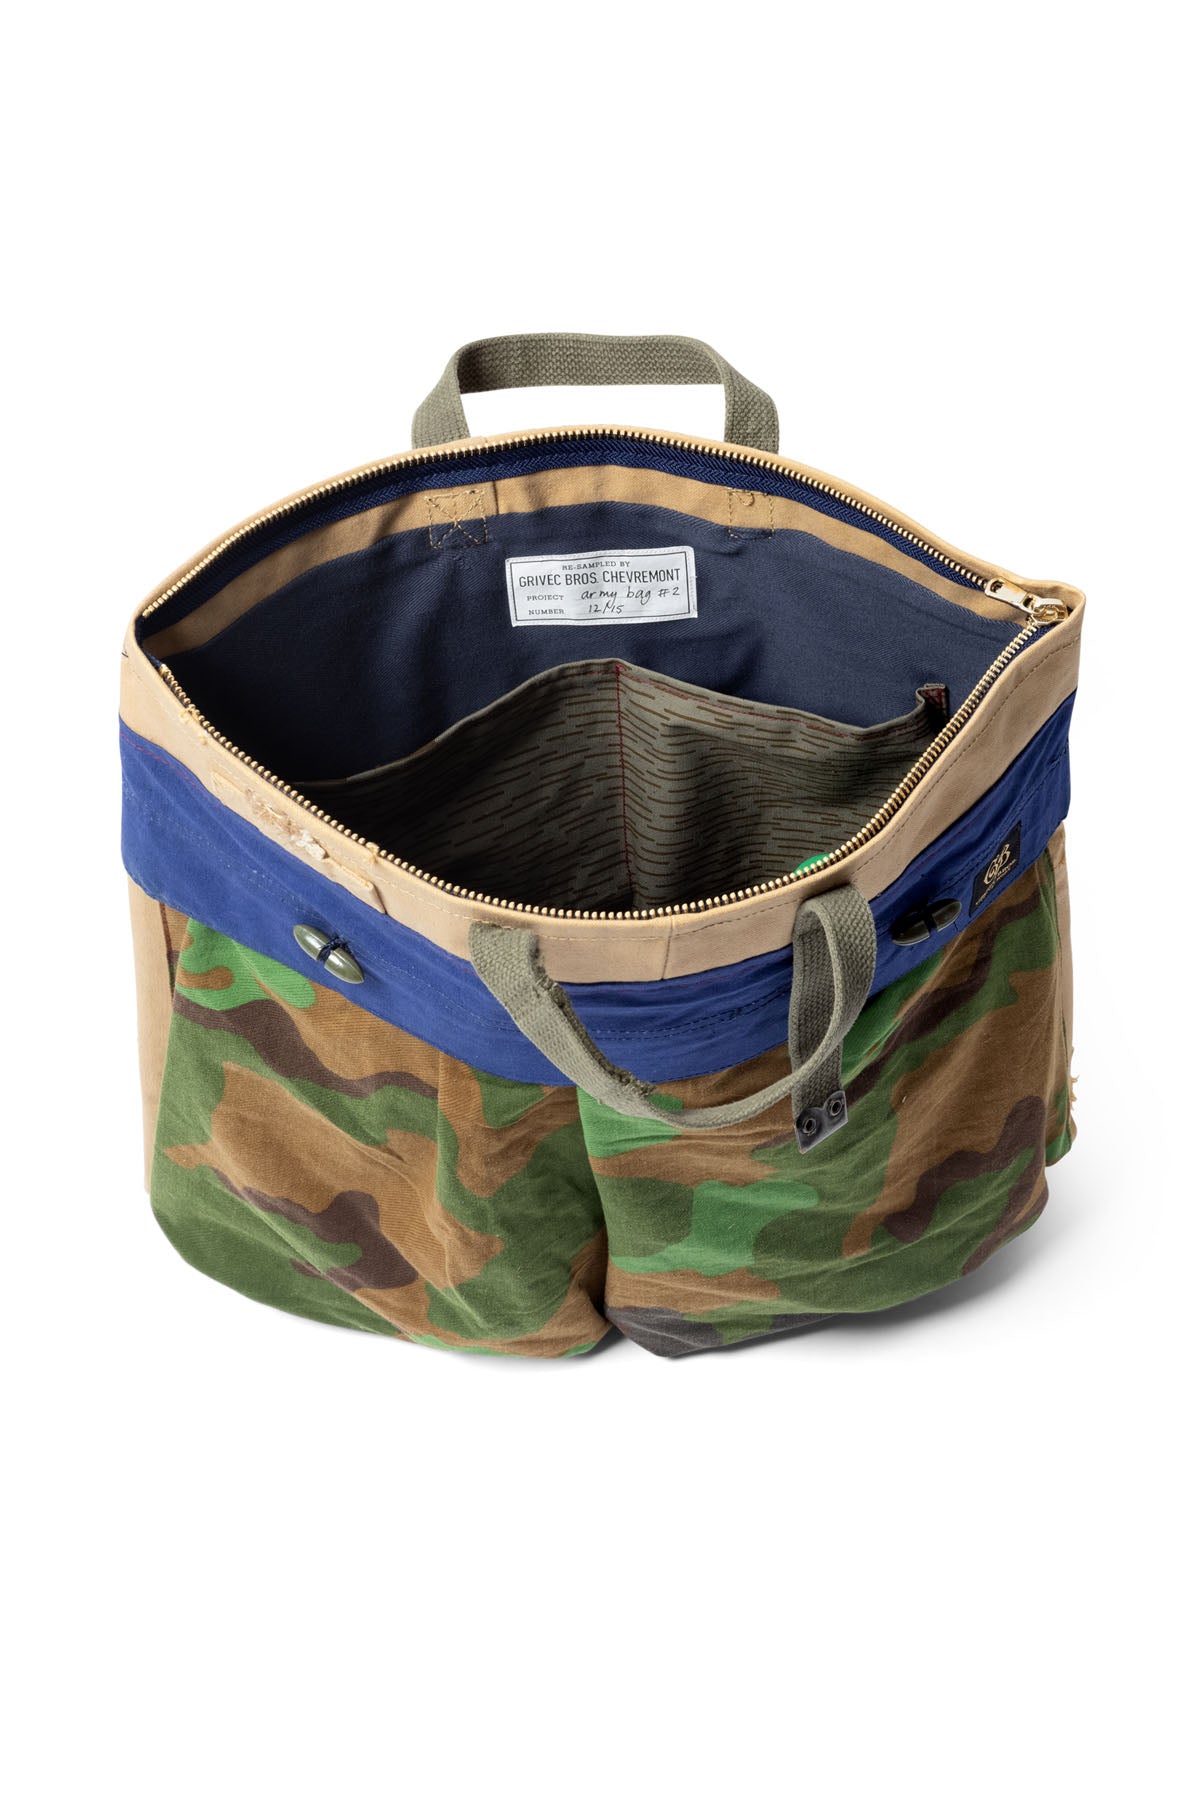 Military GI Style Flyers Helmet Bag  12 / 15